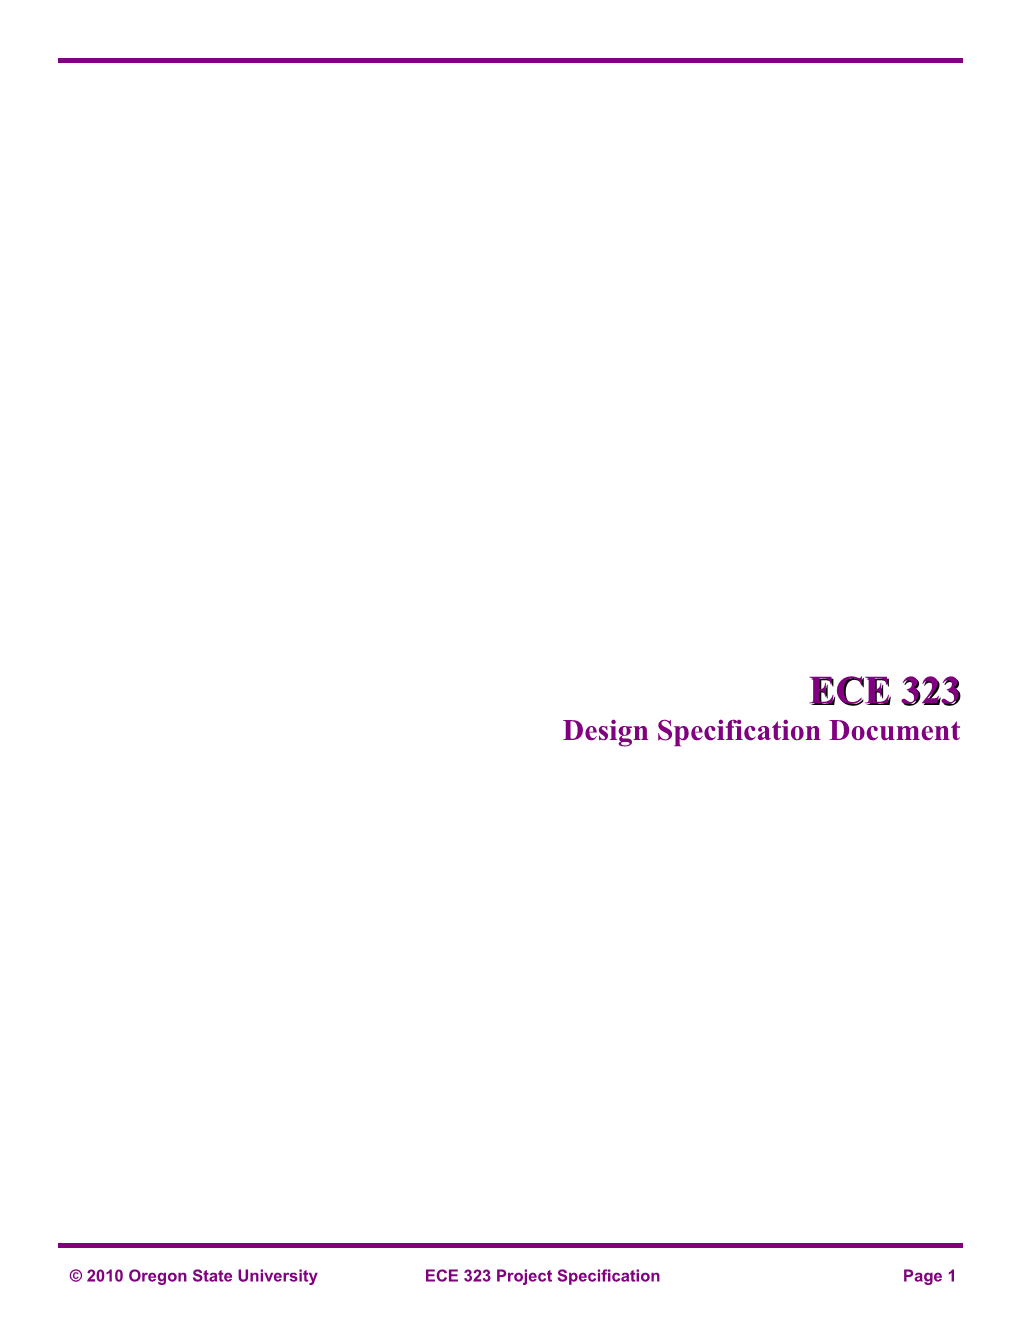 ECE 323: Design Specification Document